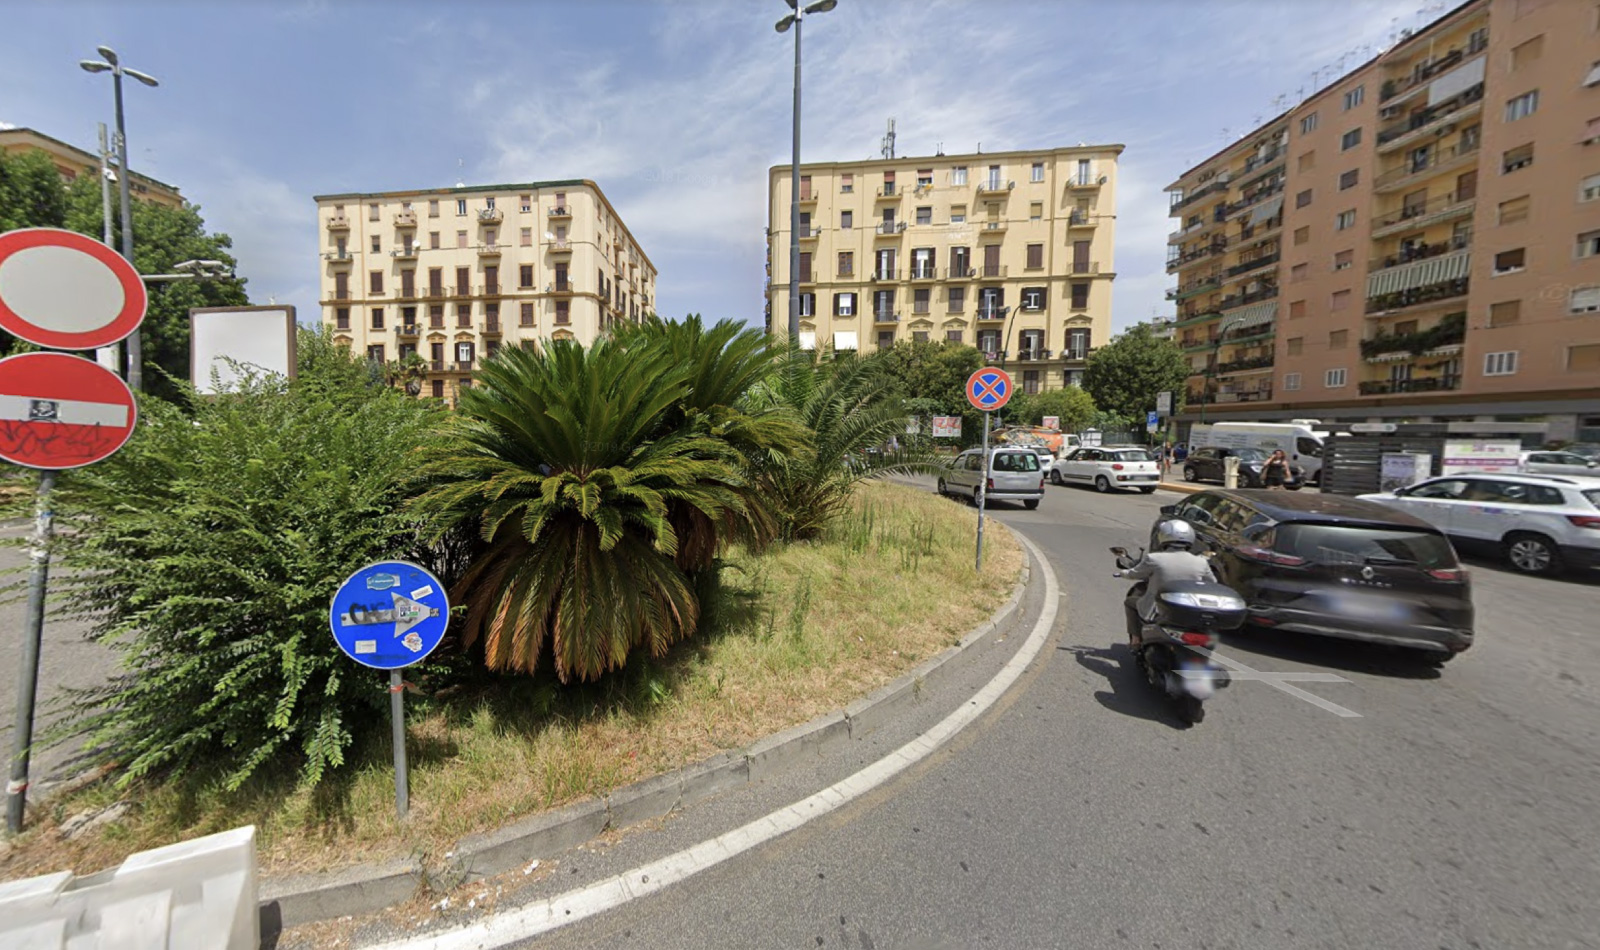 Photo of Piazza degli Artisti in Naples taken from google maps